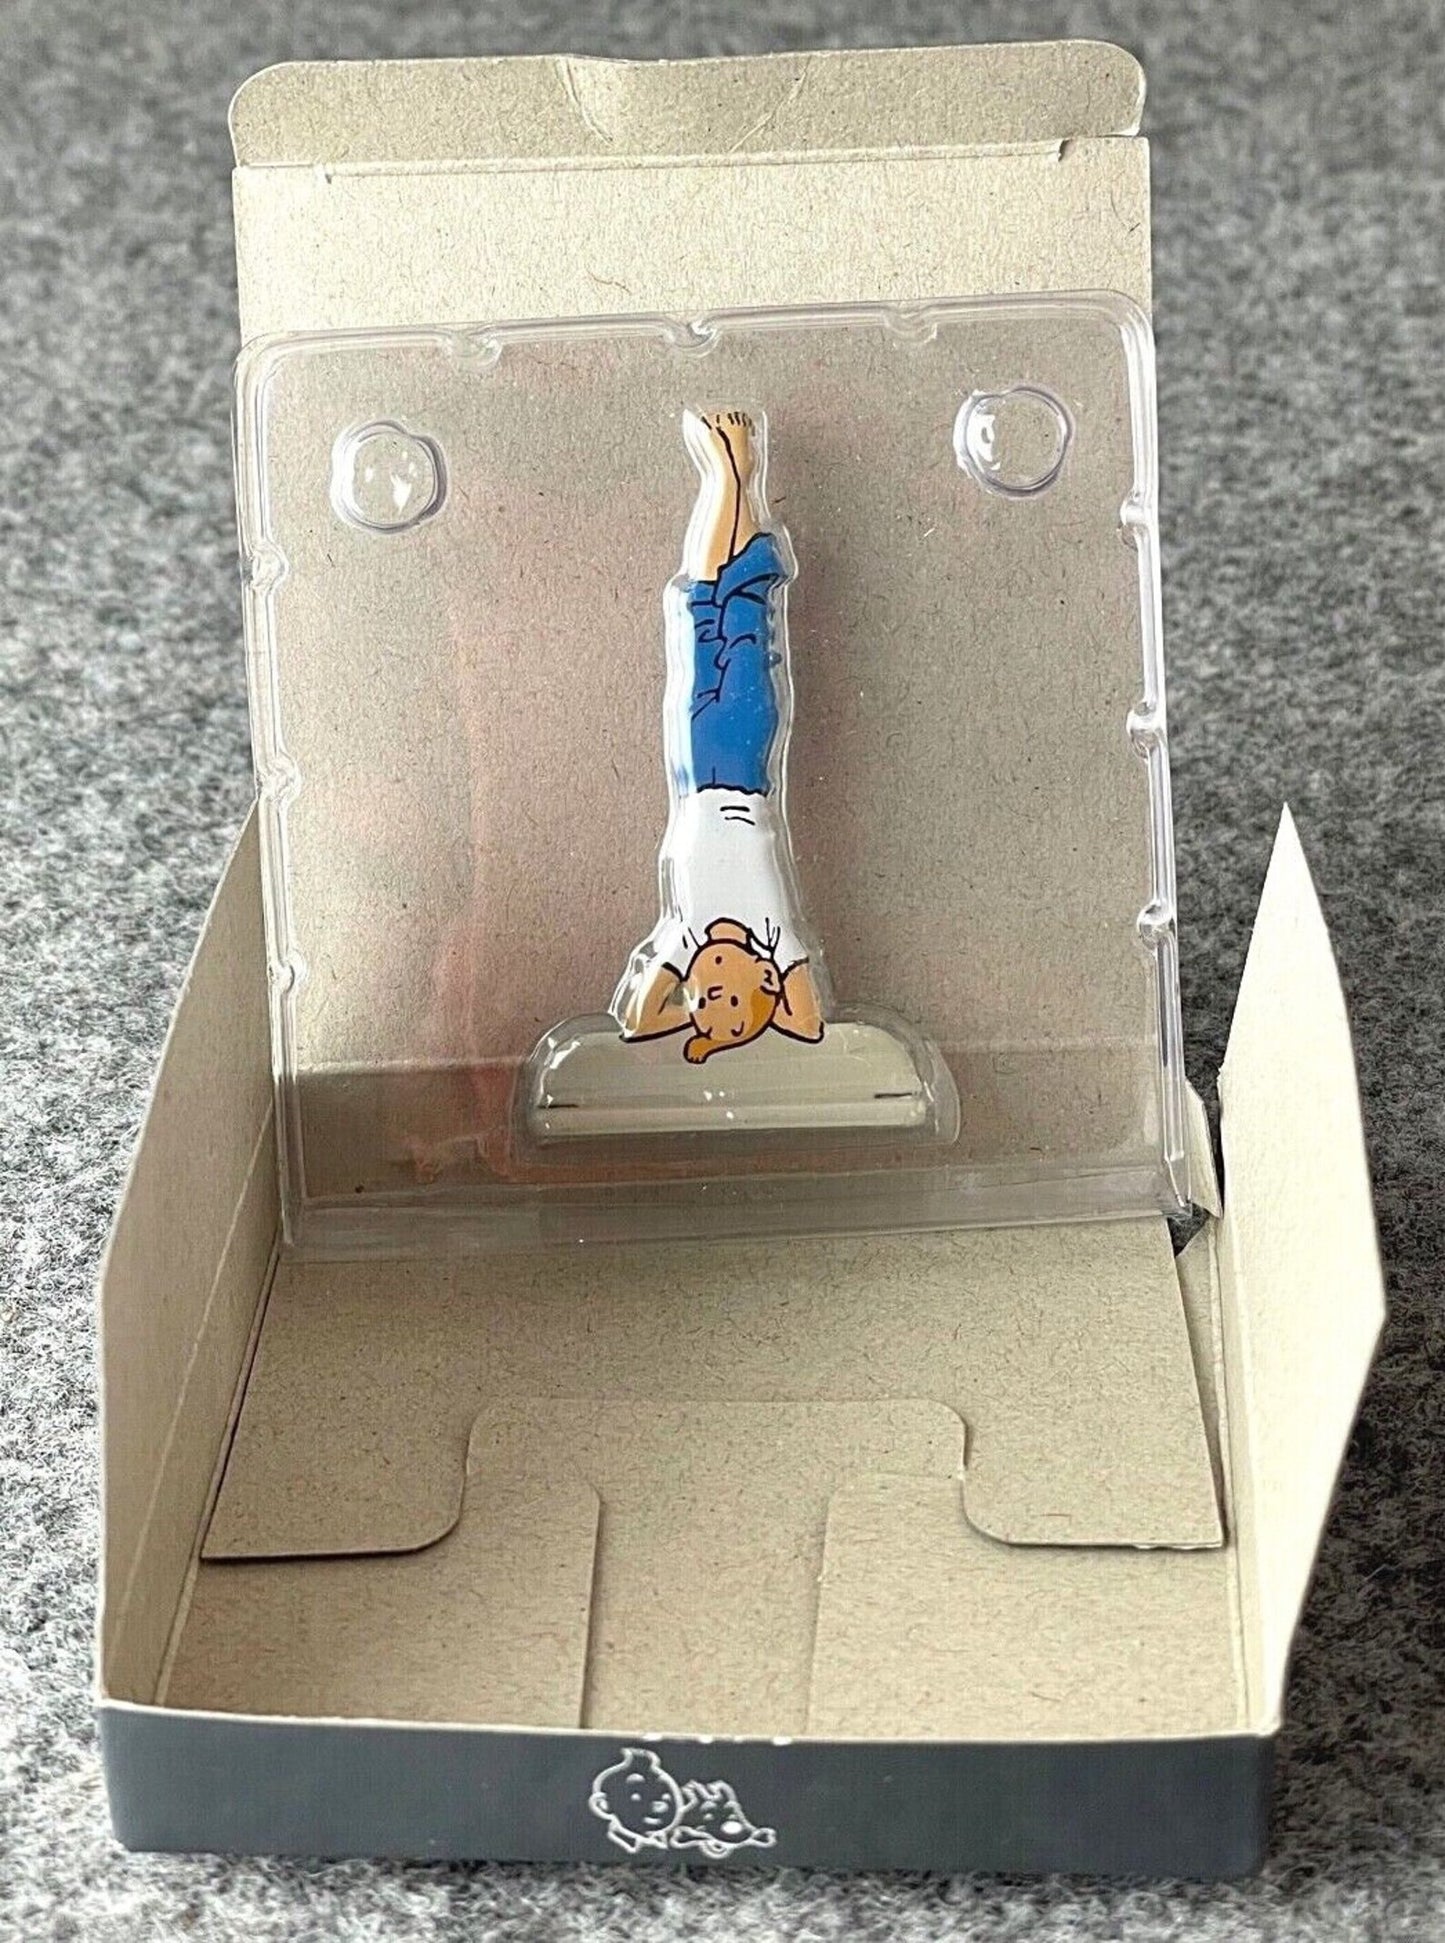 ARCHIVES TINTIN 2D Metal Figurine: Tintin Doing Yoga Moulinsart Relief Figure